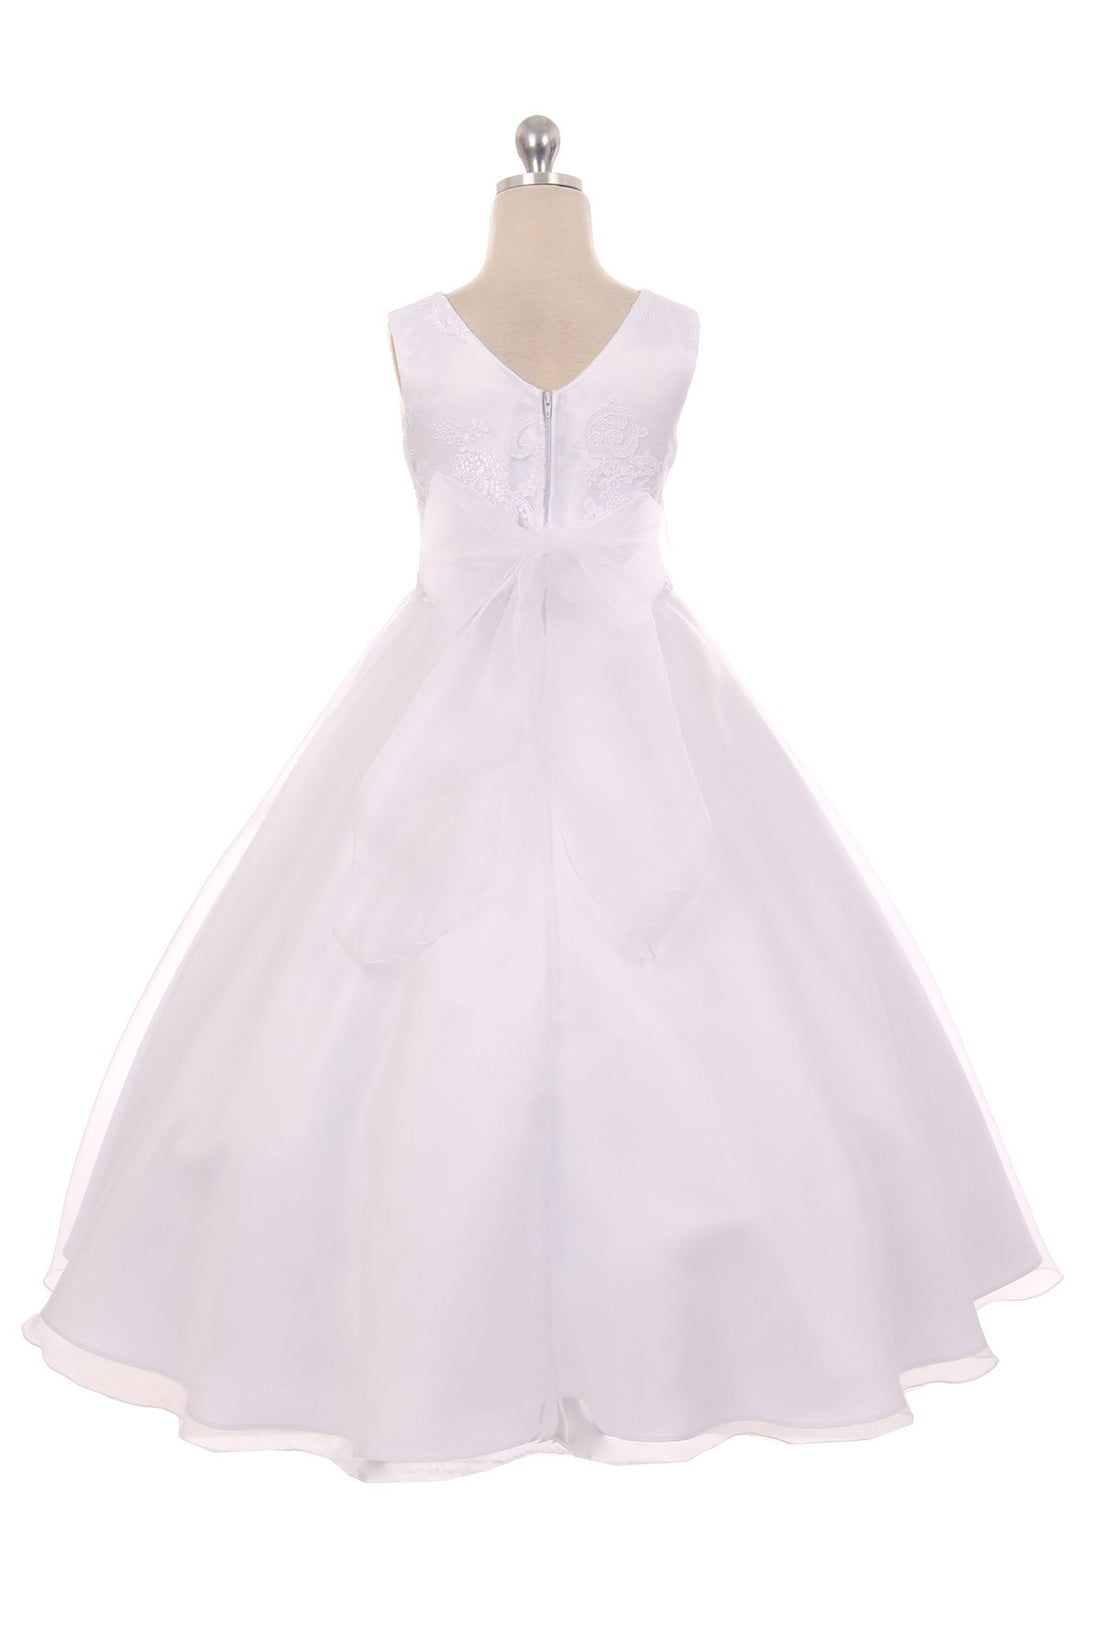 Girl Lace Applique Flowergirl Dress - AS418 Kids Dream